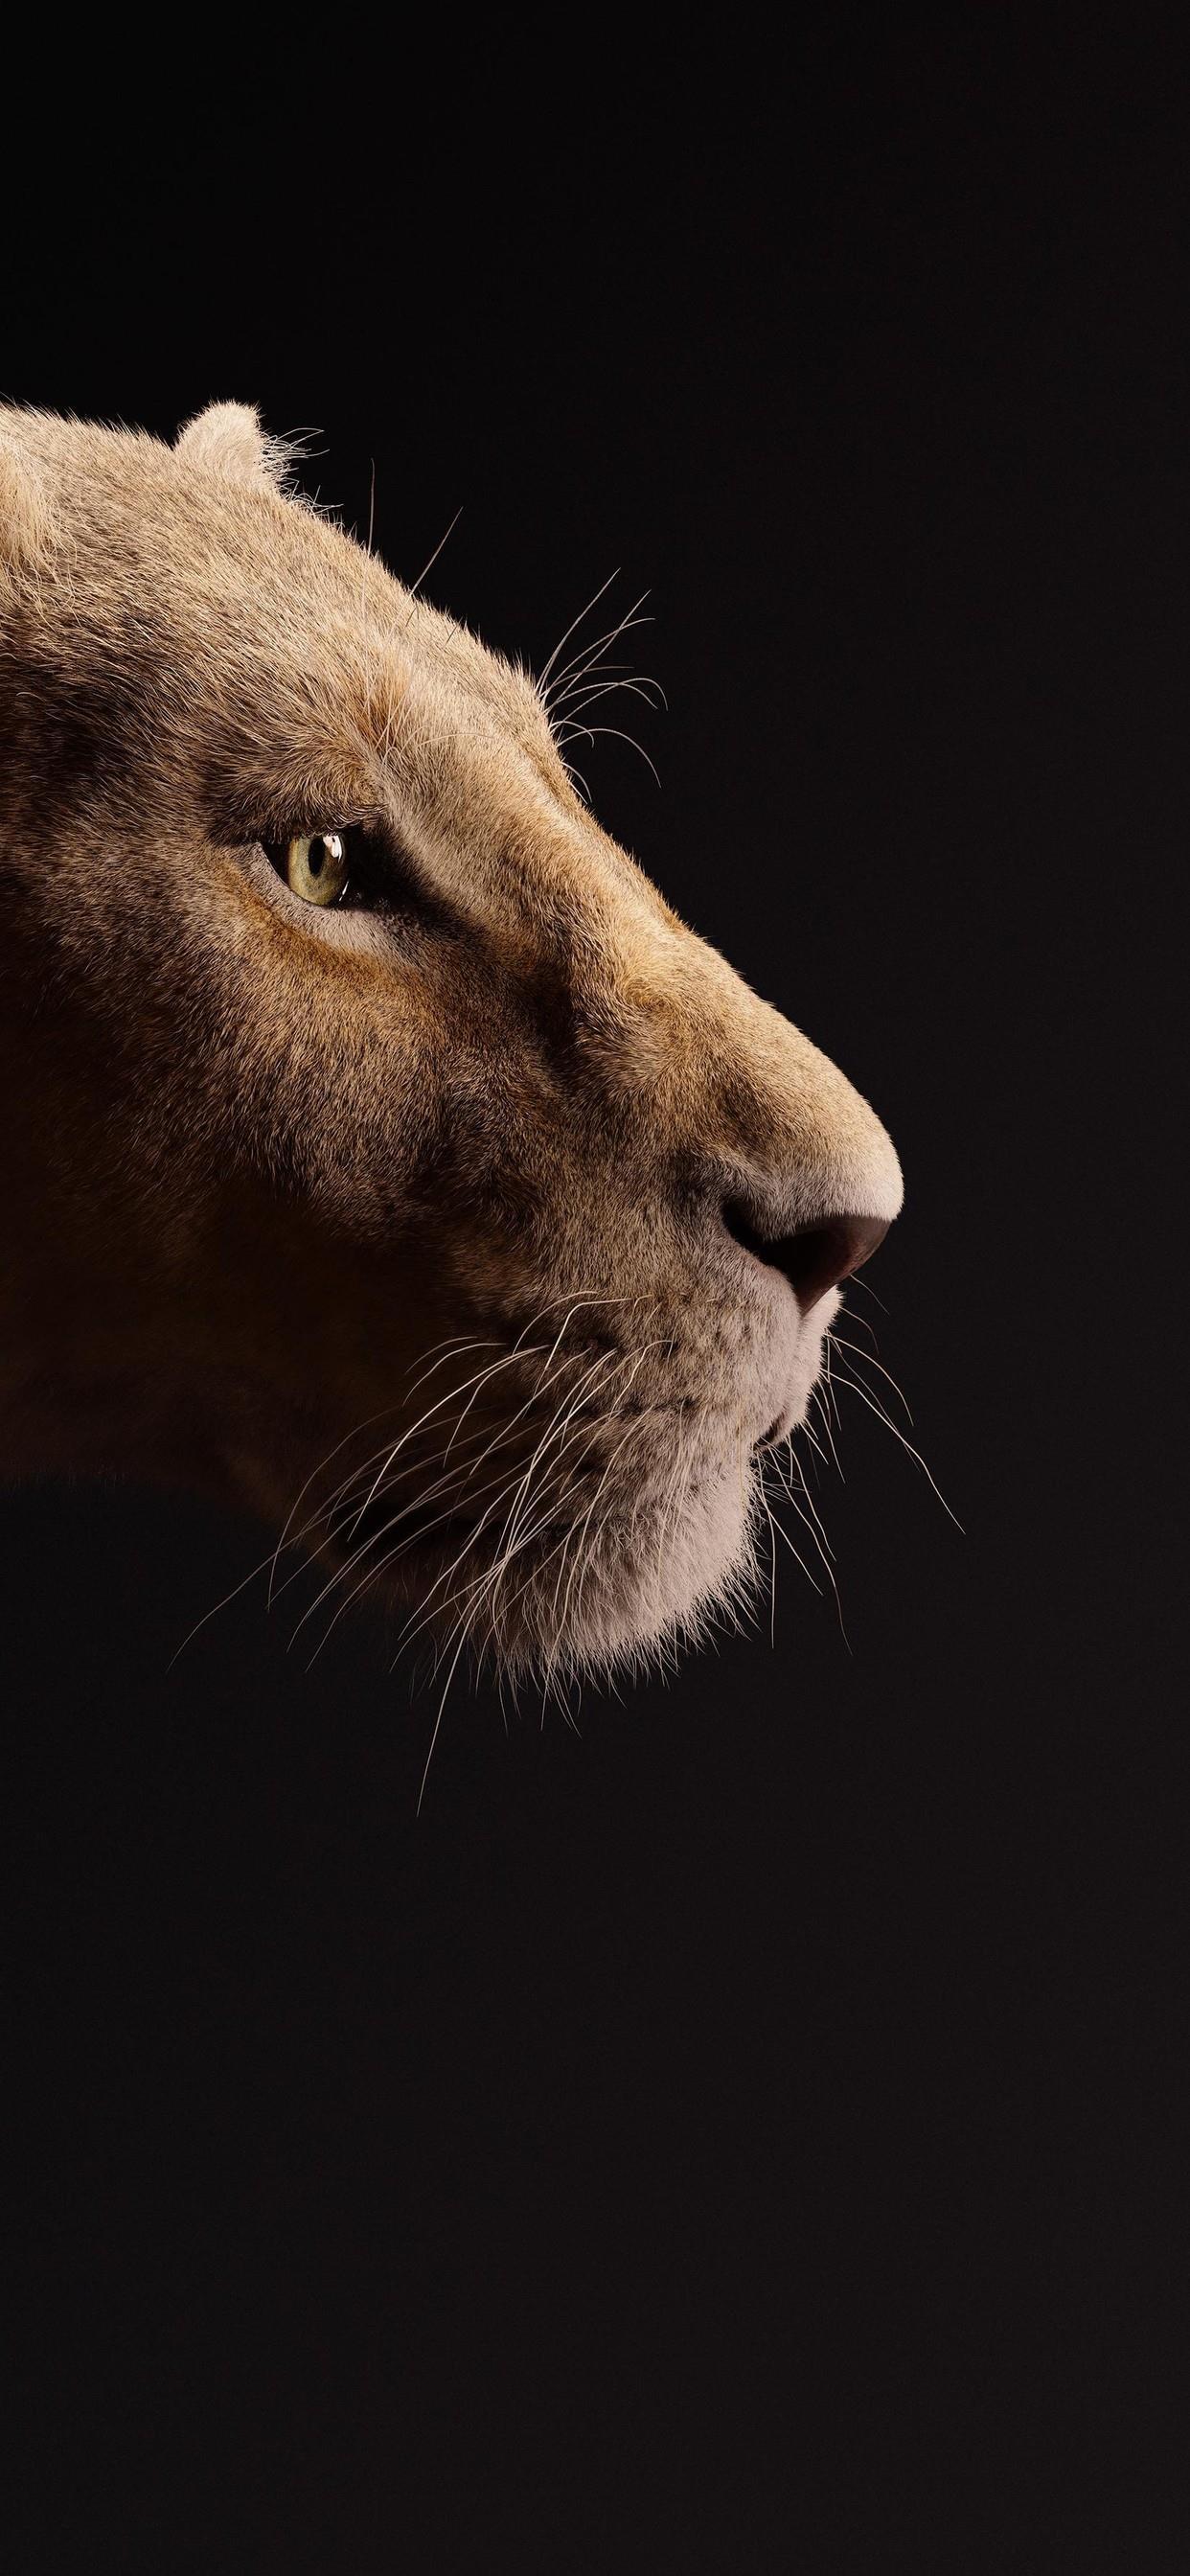 beyonce as nala the lion king 2019 5k iPhone X Wallpaper Free Download